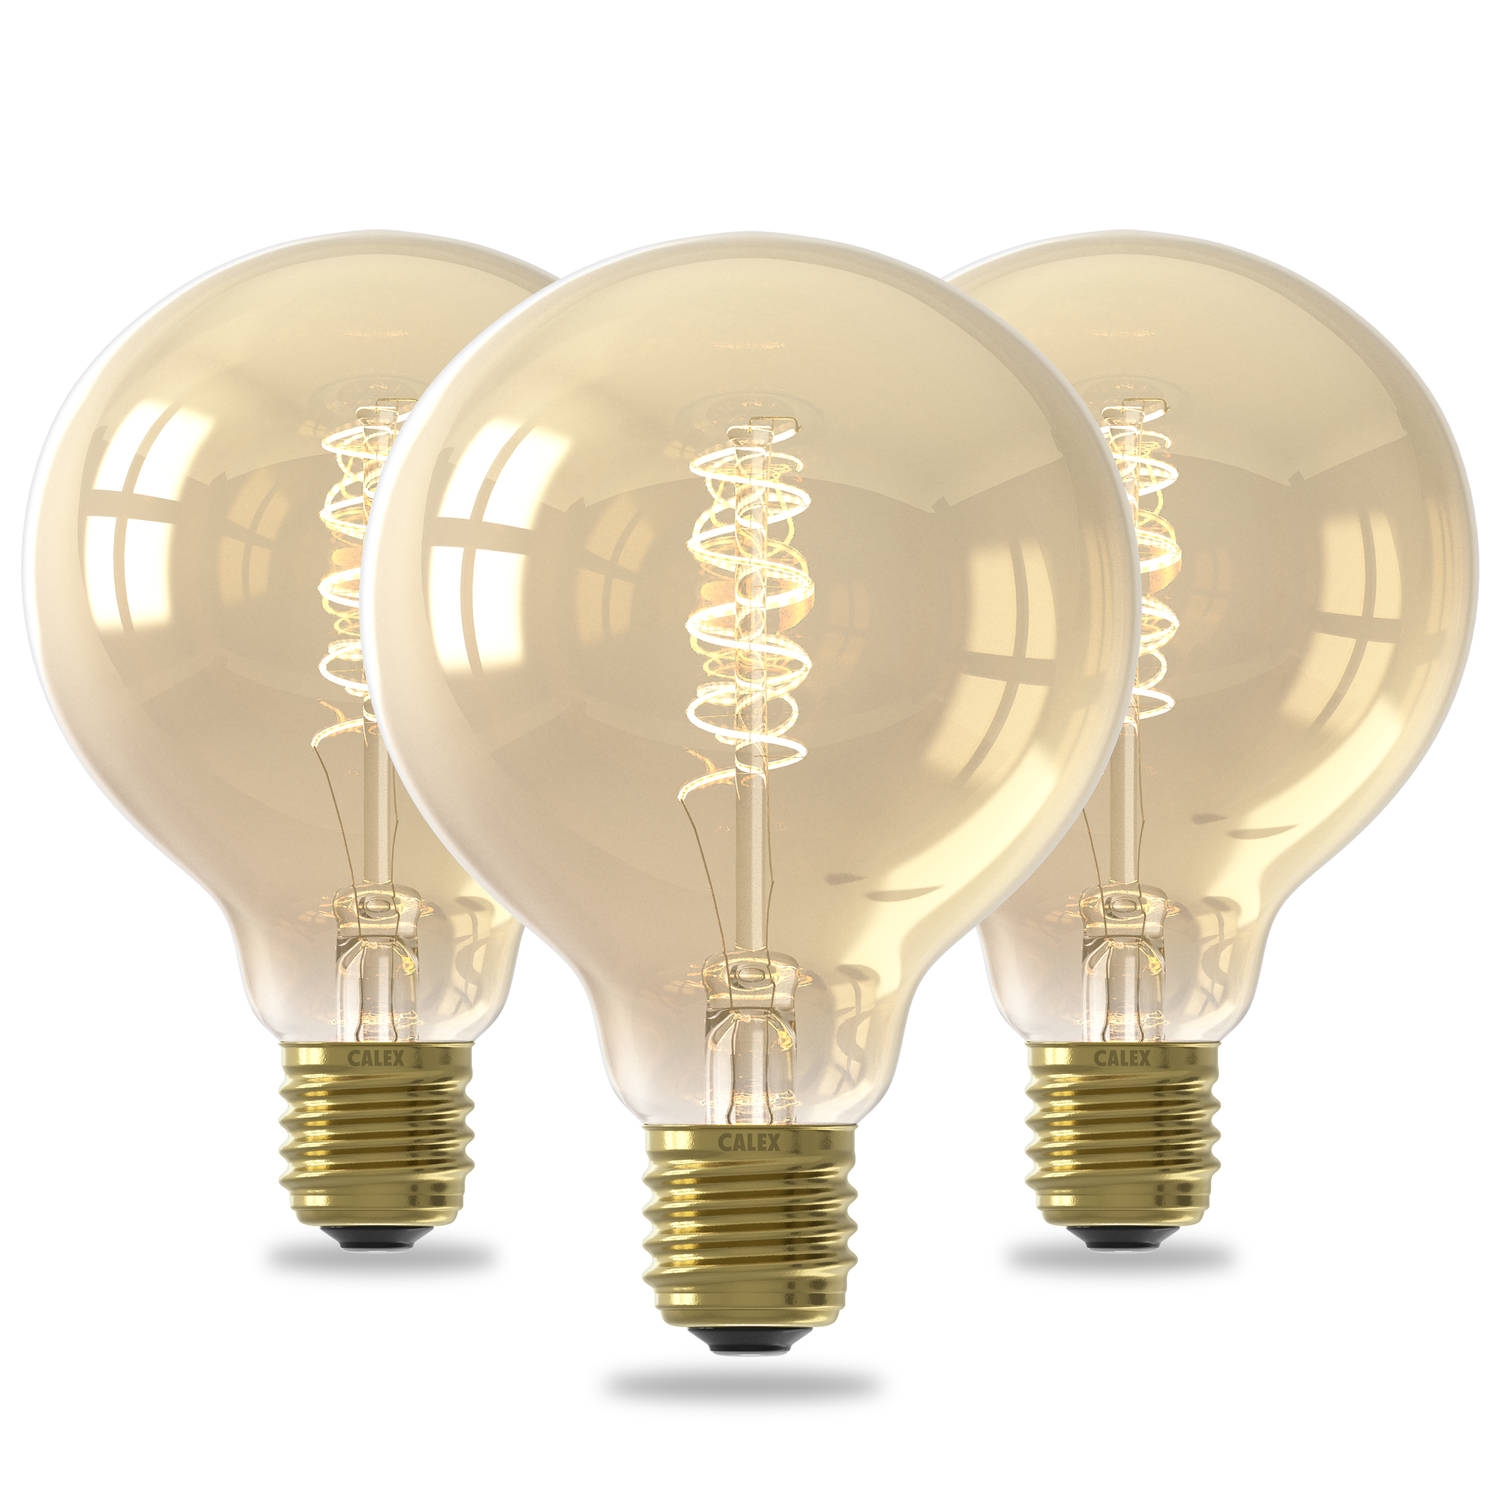 Calex Spiraal Filament LED Lamp - Set van 3 stuks - G95 Vintage Lichtbron - E27 - Goud - Warm Wit Licht - Dimbaar